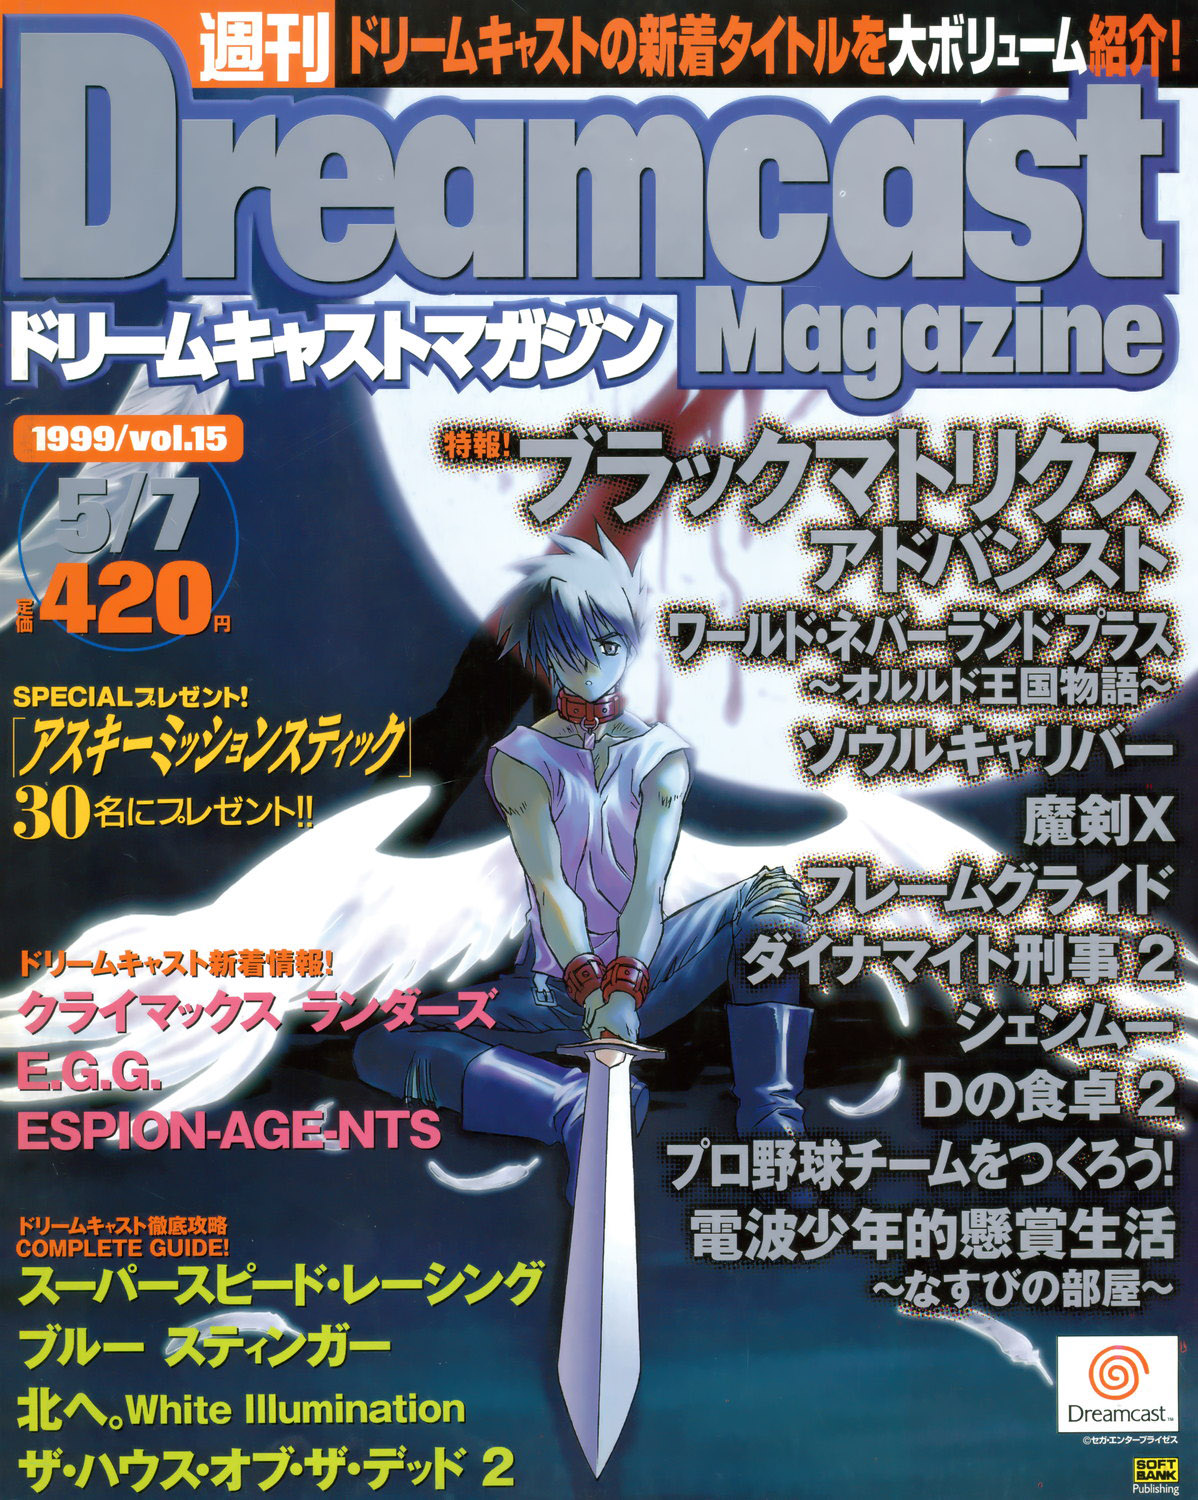 Dreamcast Magazine 022 May 5 1999 Dreamcast Magazine Jp Retromags Community